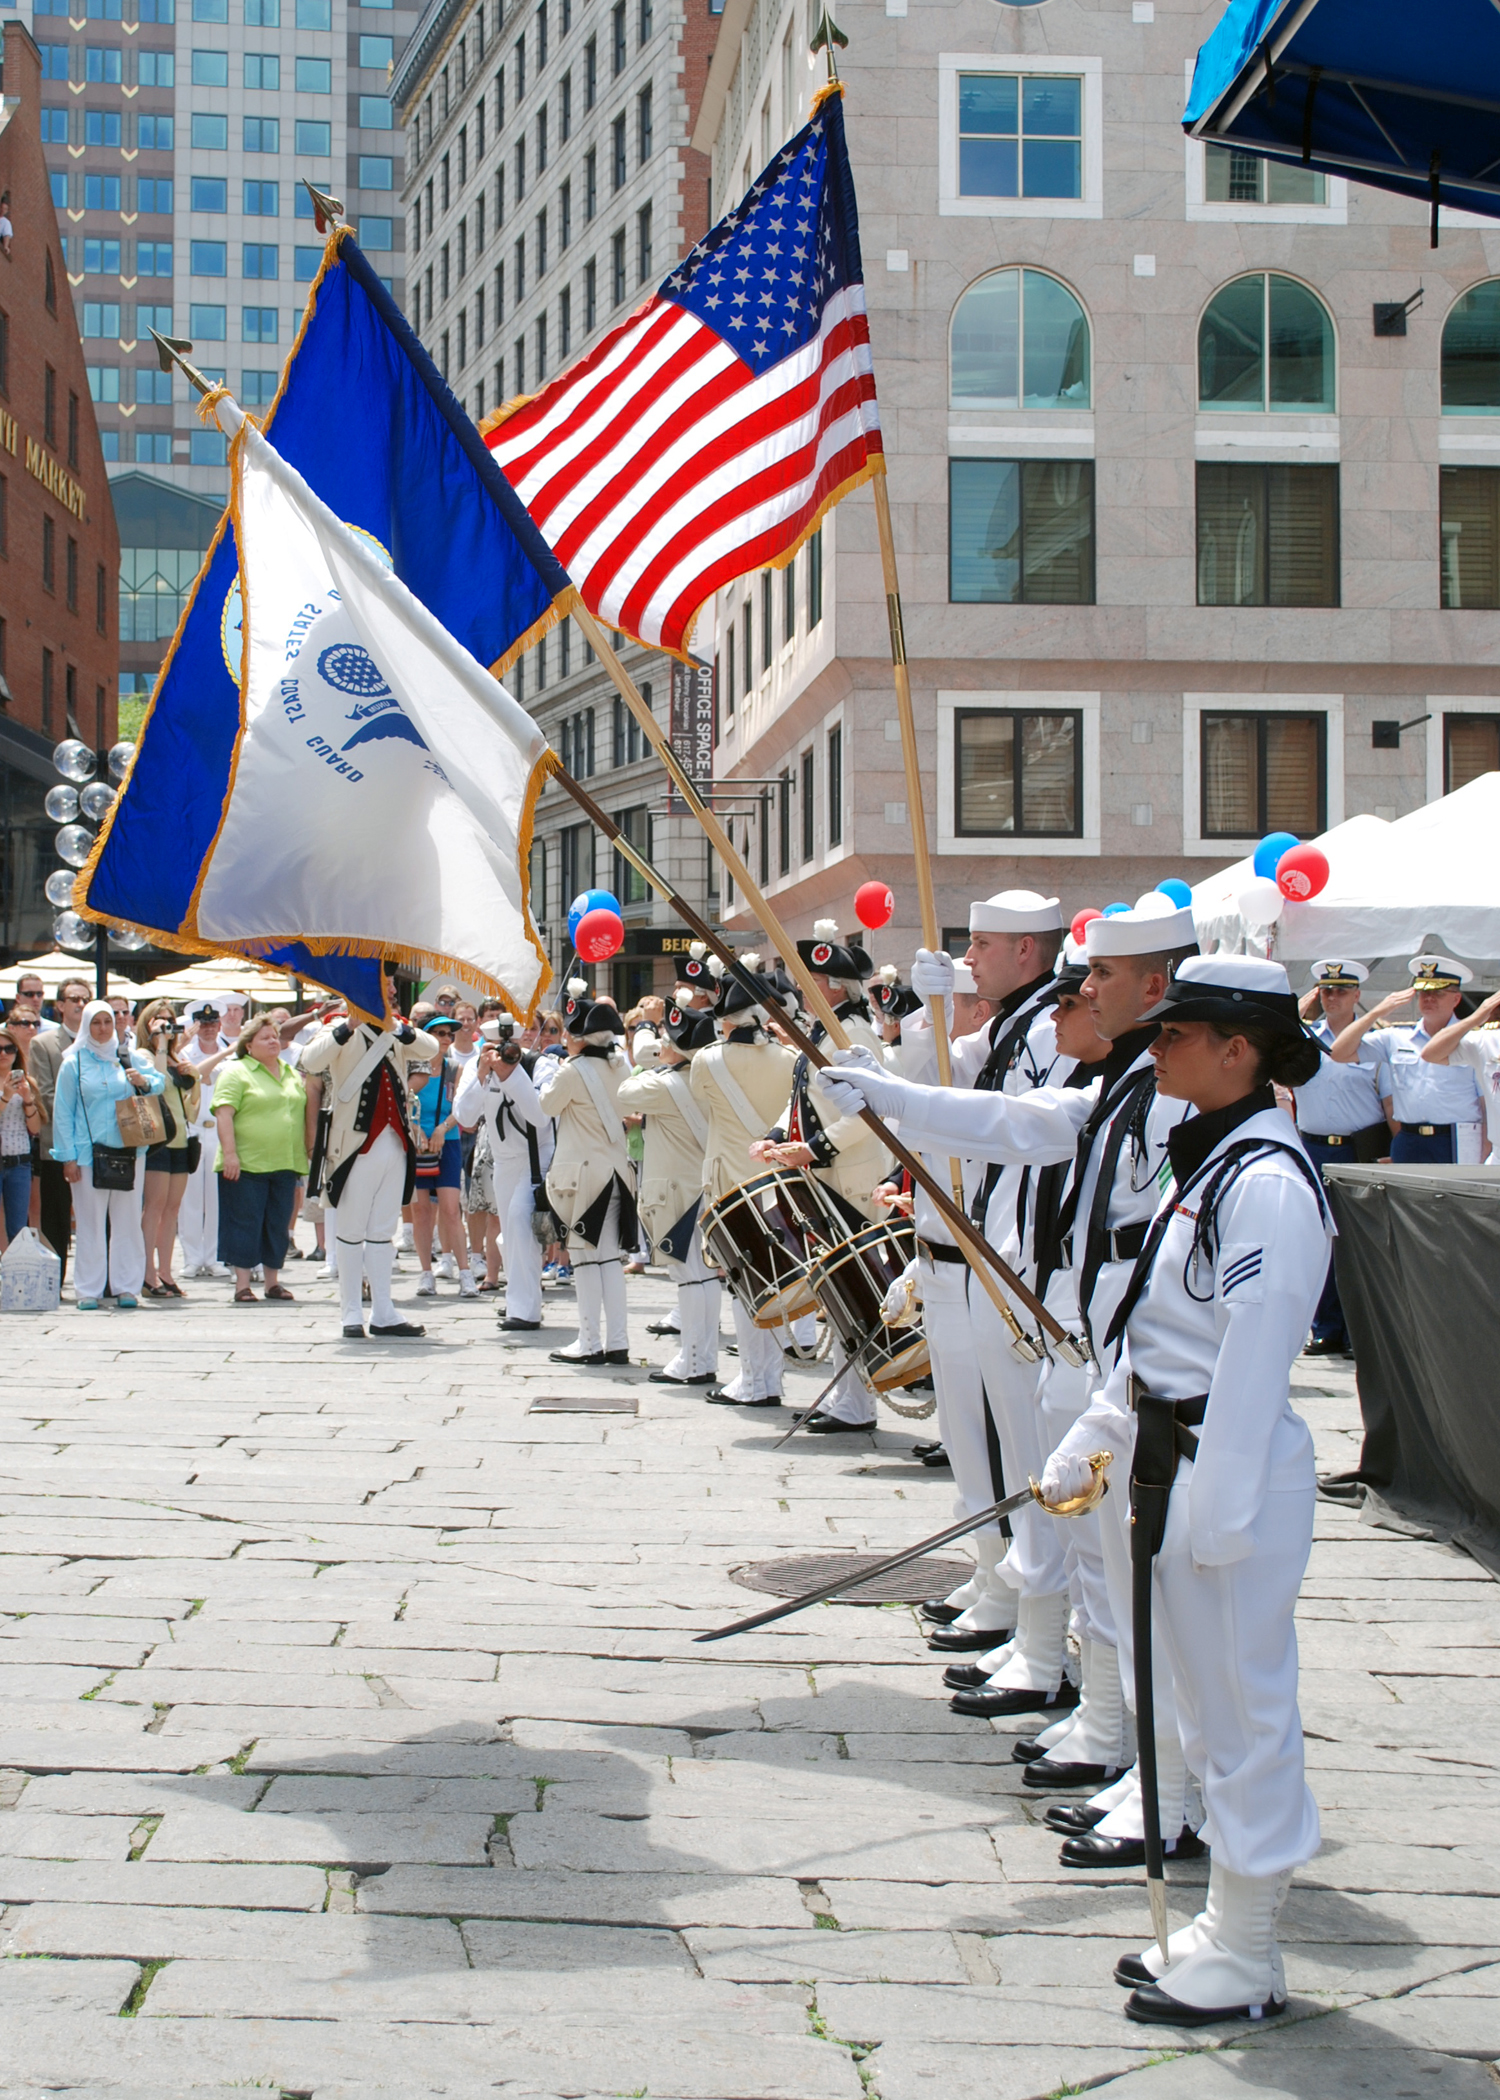 Boston’s Fourth of July festival. US Harbors